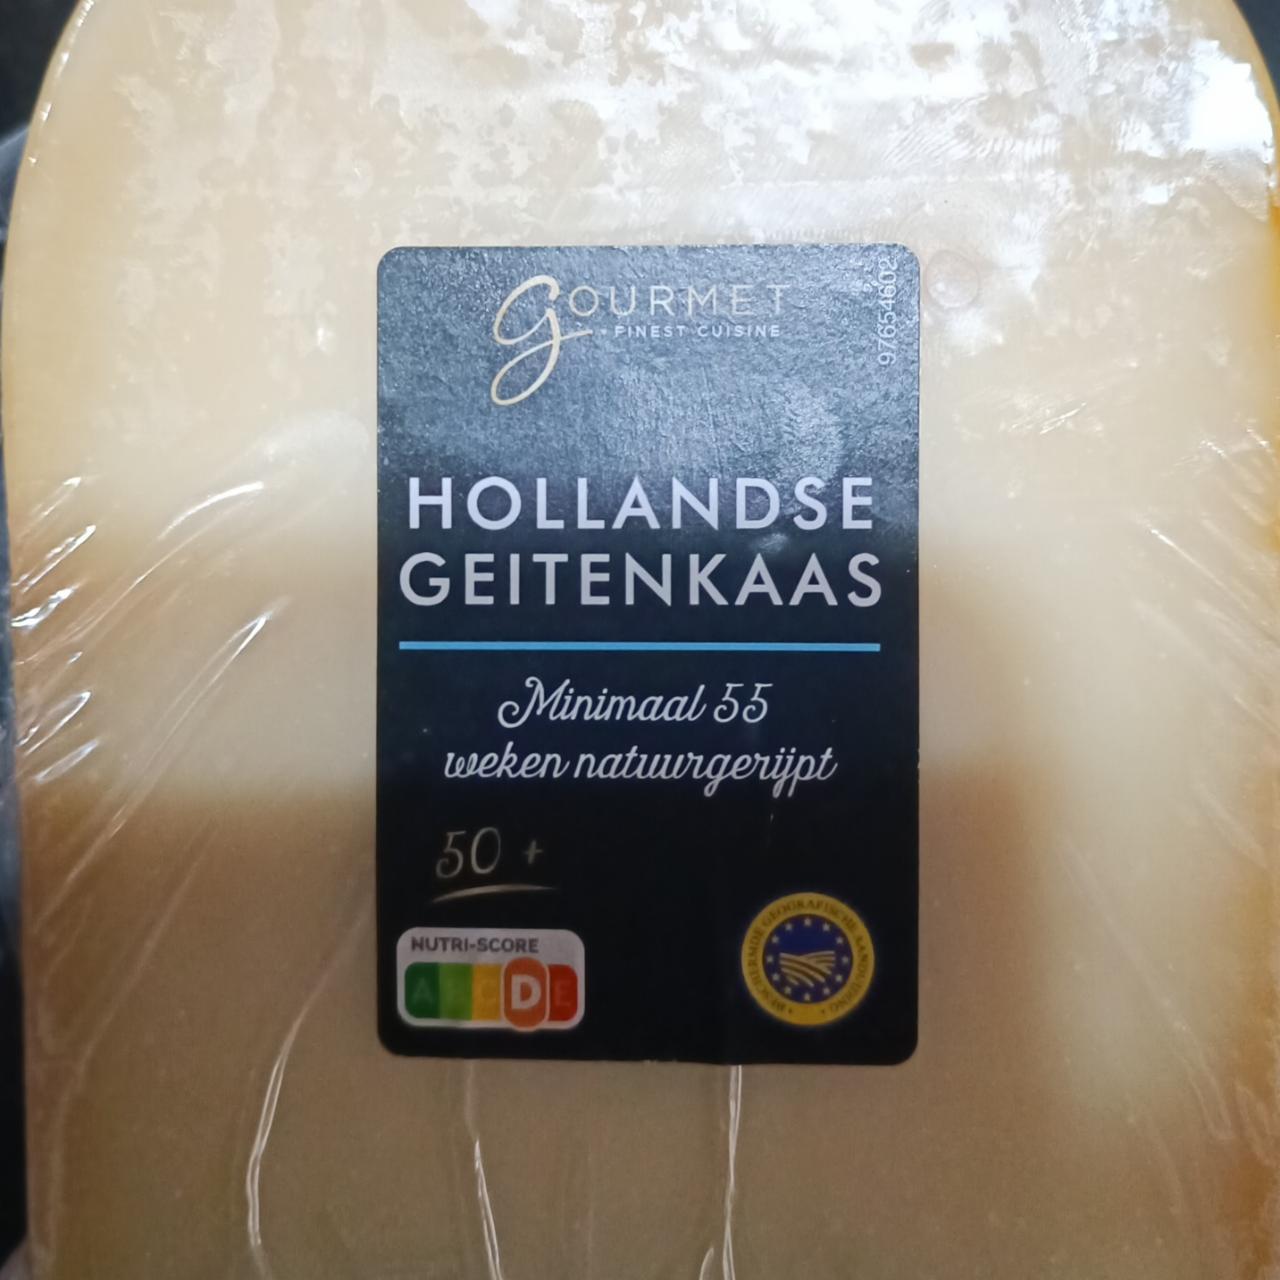 Fotografie - Hollandse geitenkaas Gourmet finest cuisine